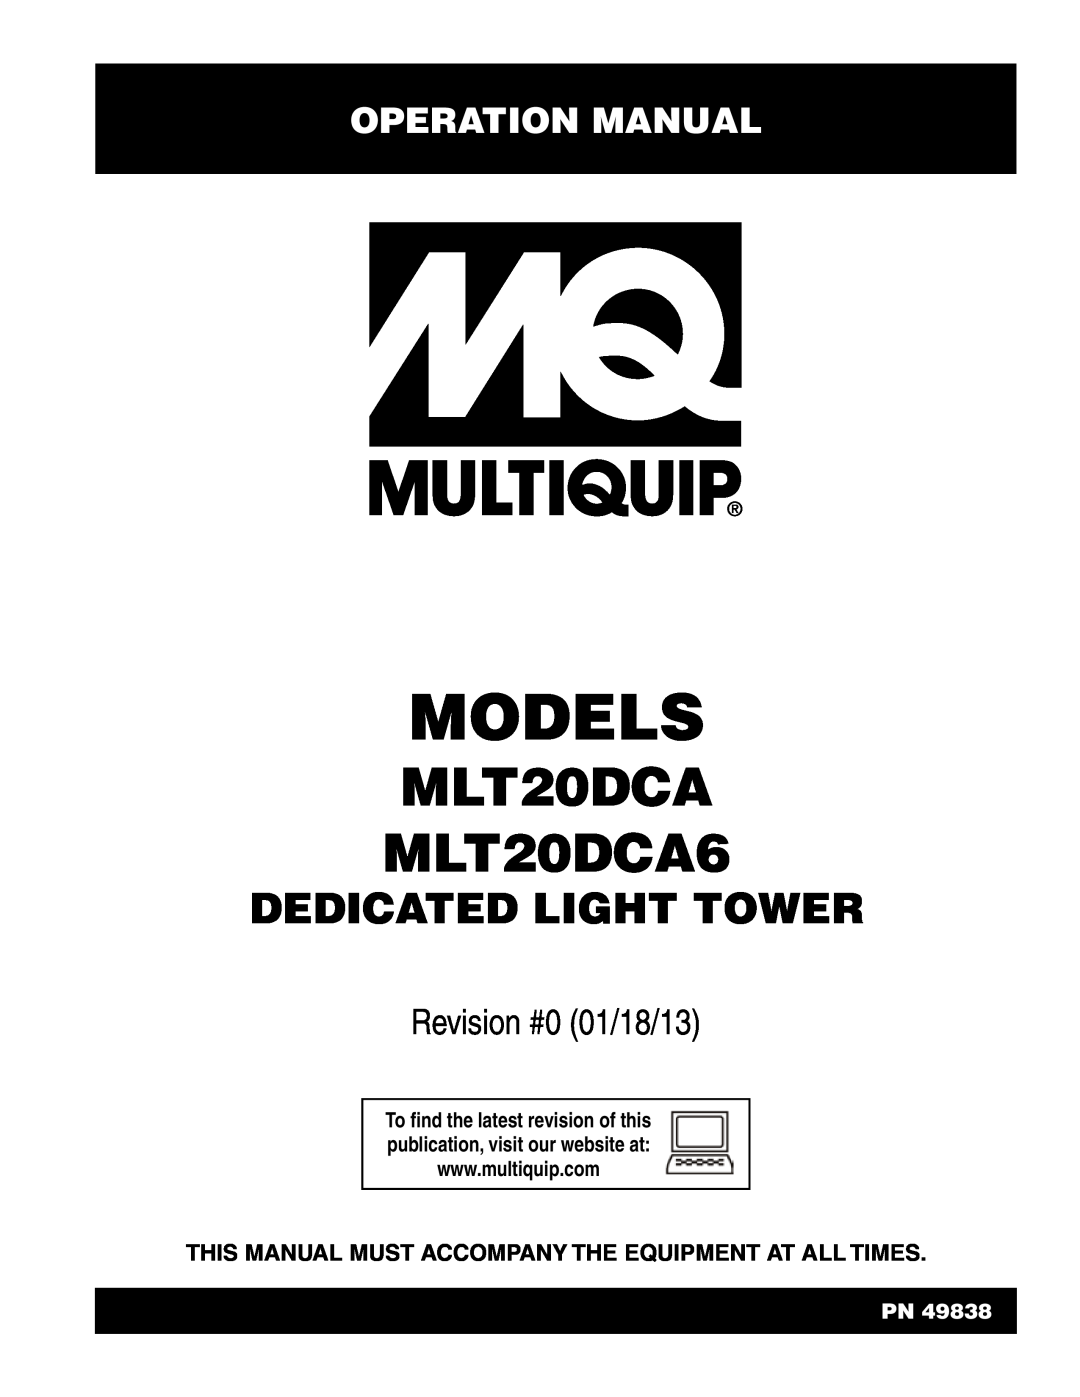 Multi Tech Equipment operation manual Operation Manual, Models, MLT20DCA MLT20DCA6, dedicated light tower 